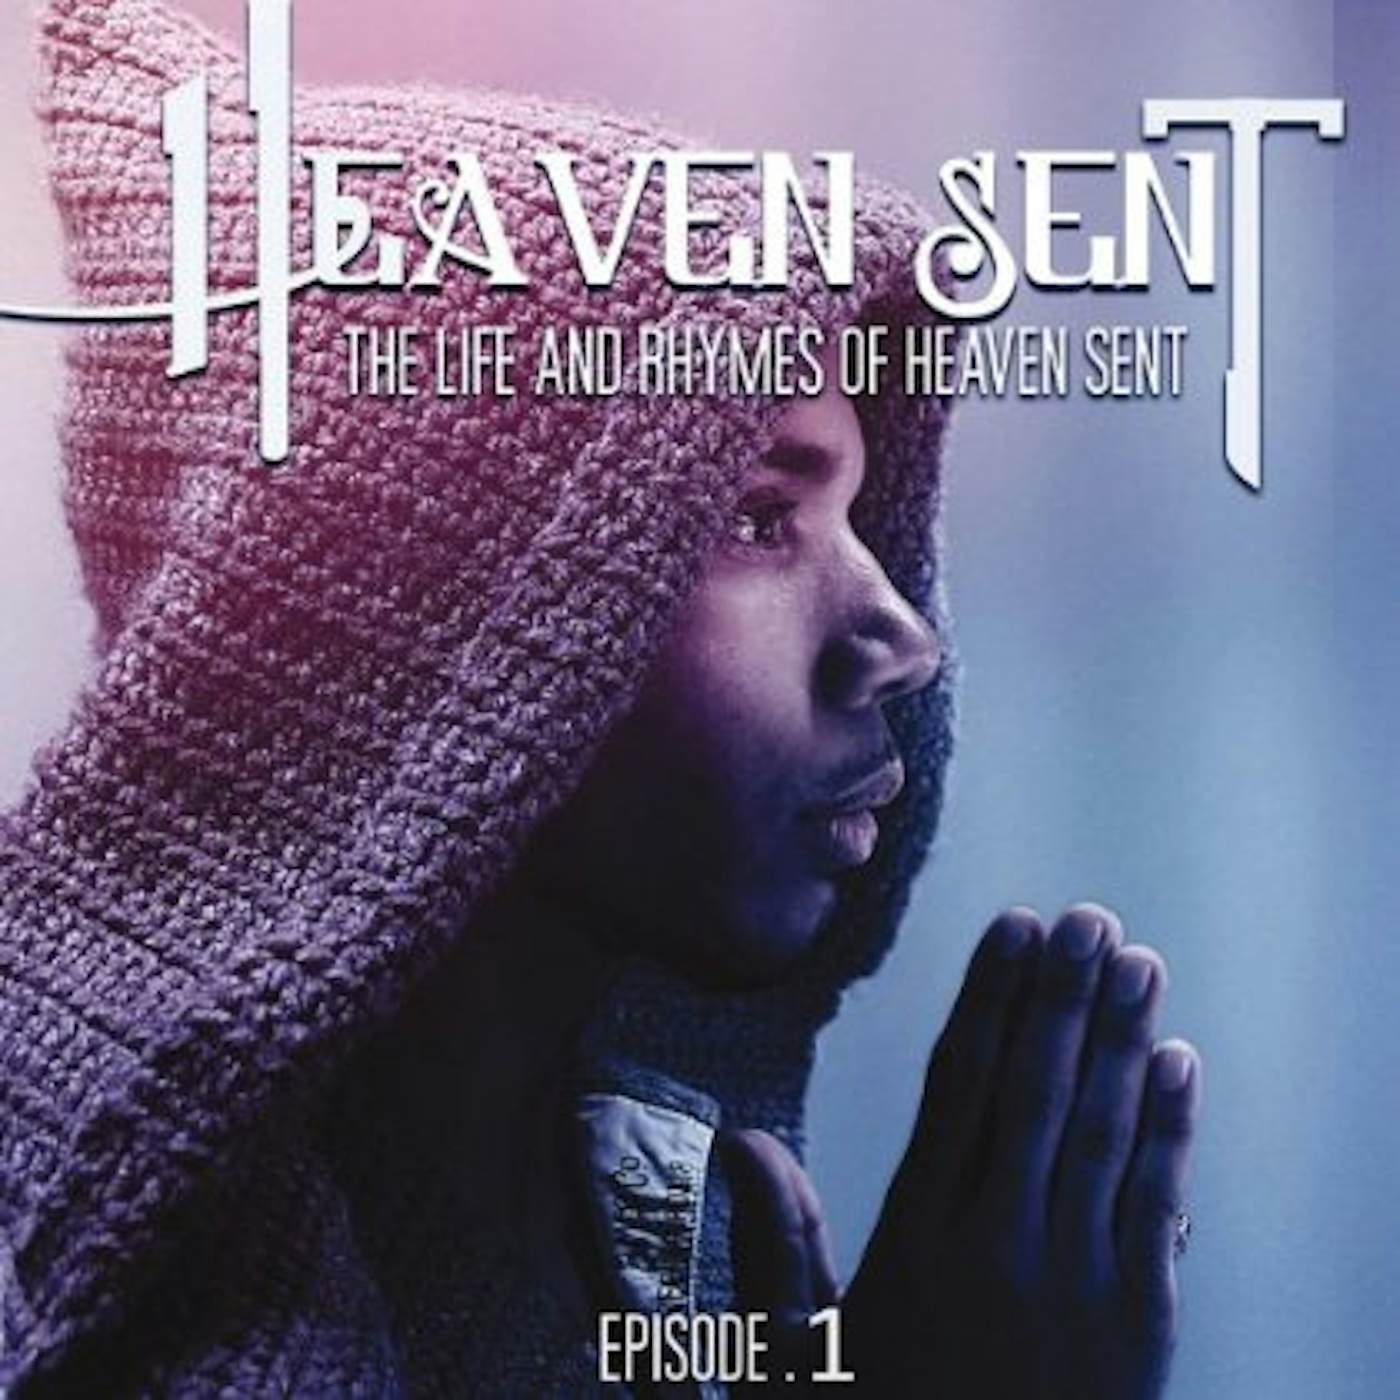 LIFE & RHYMES OF HEAVEN SENT EPISODE 1 CD